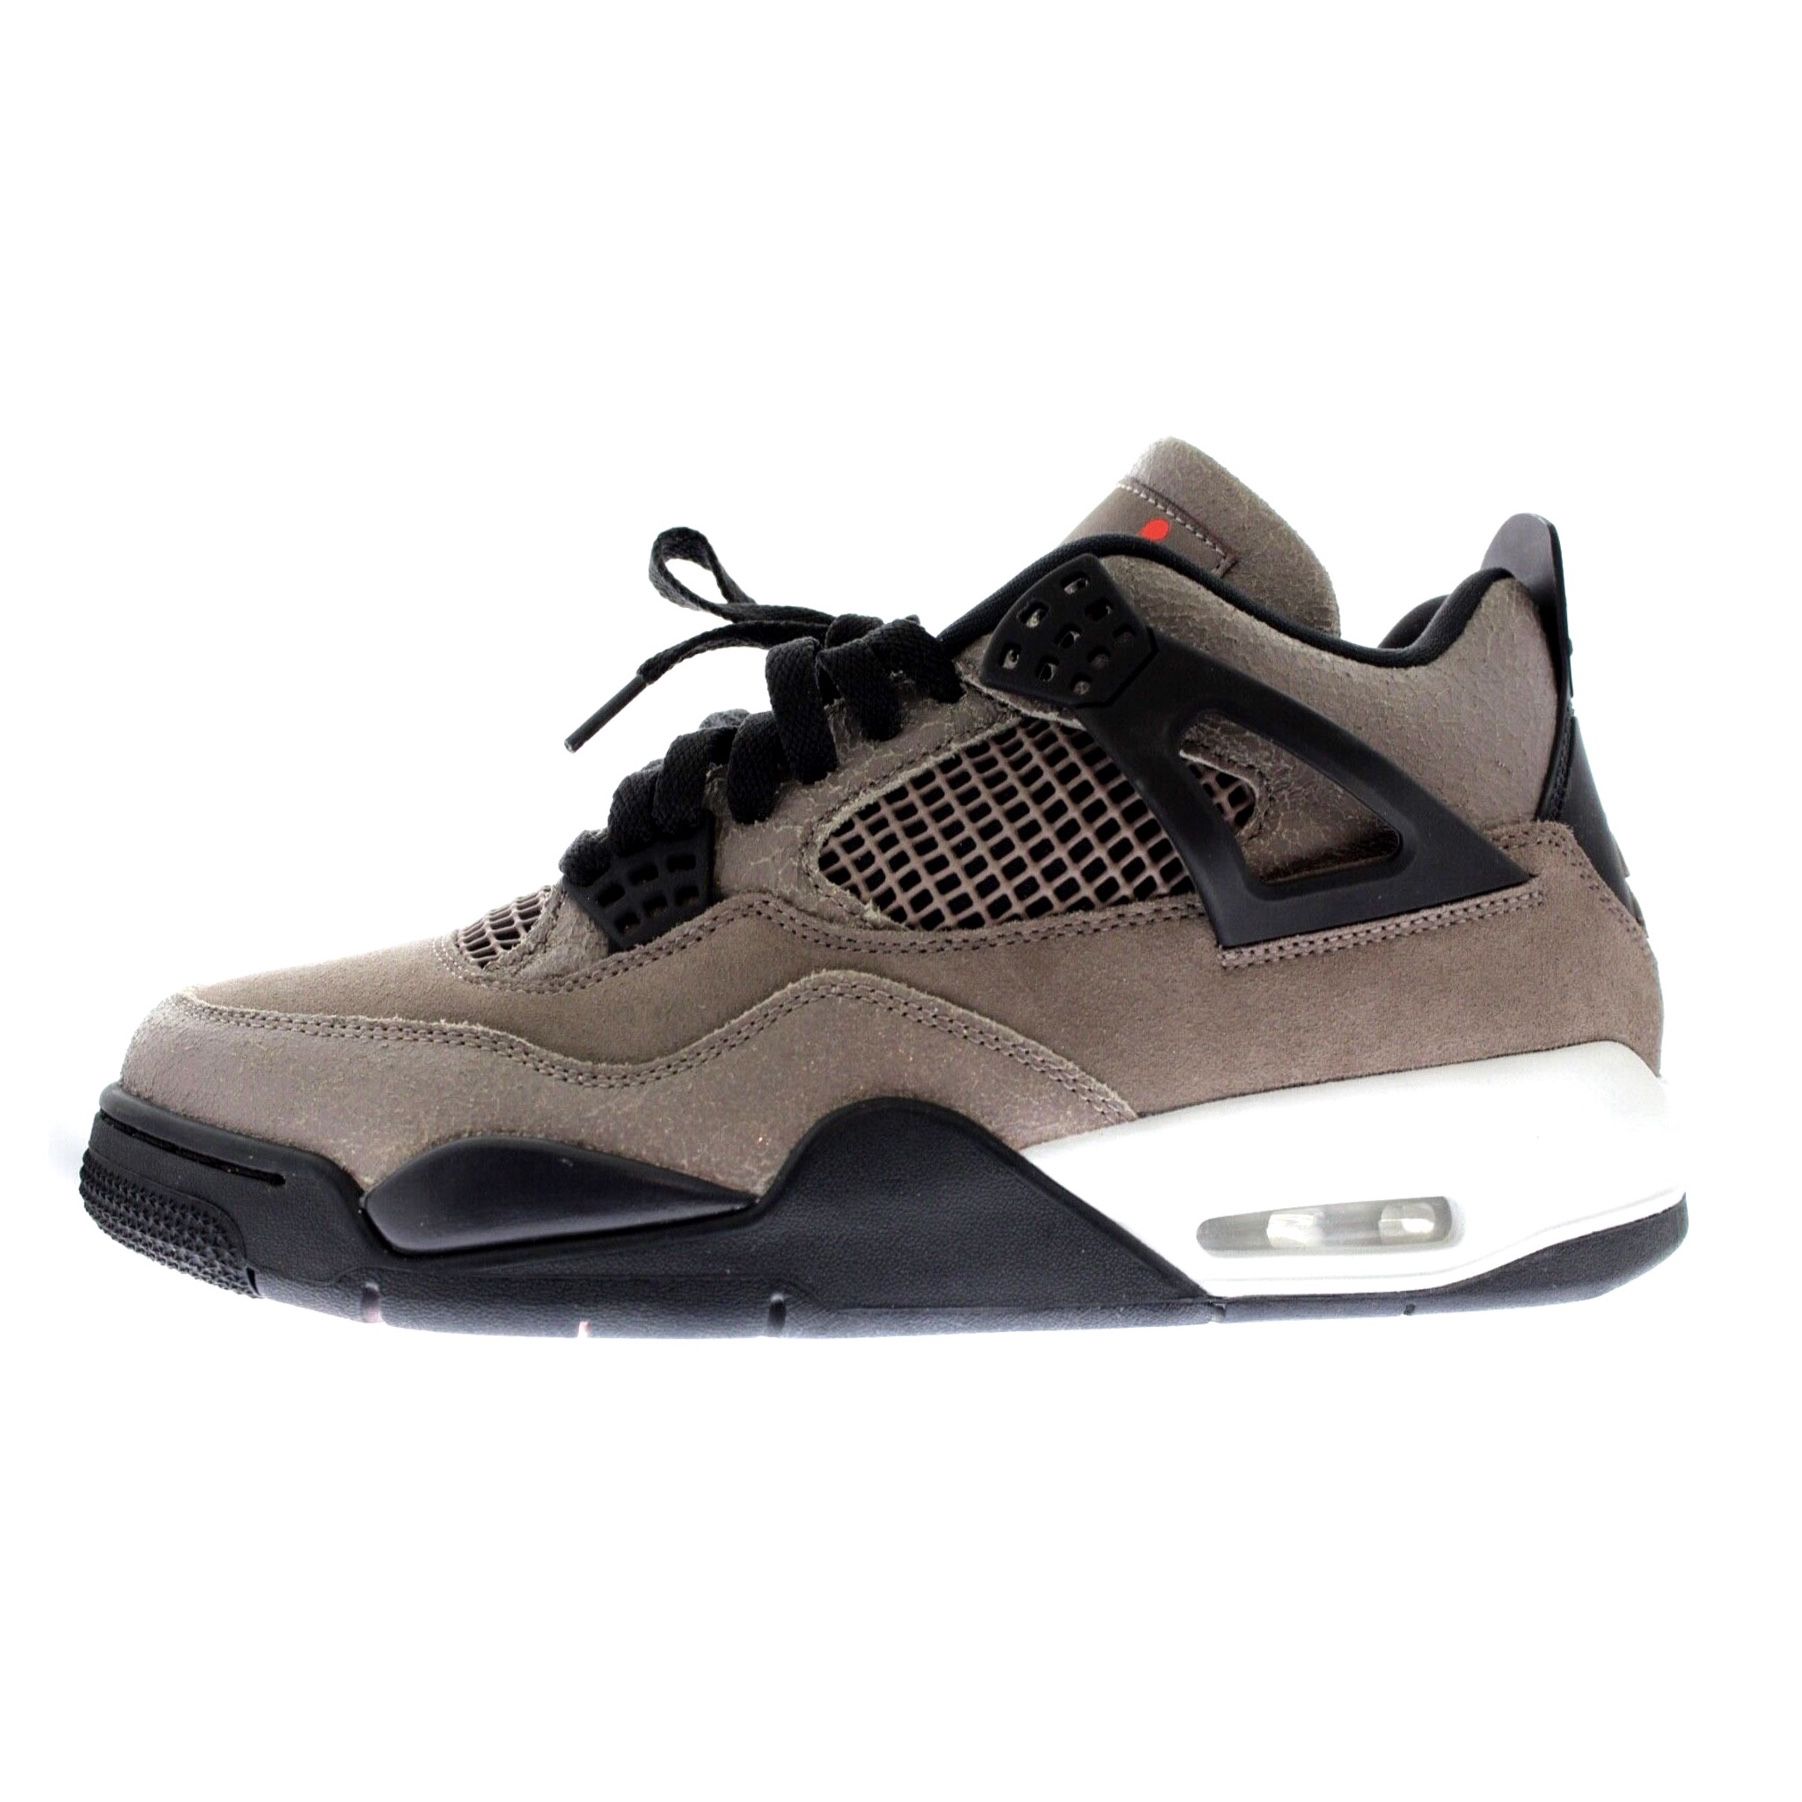 Size 9.5 - Jordan 4 Retro Taupe Haze men's sneakers